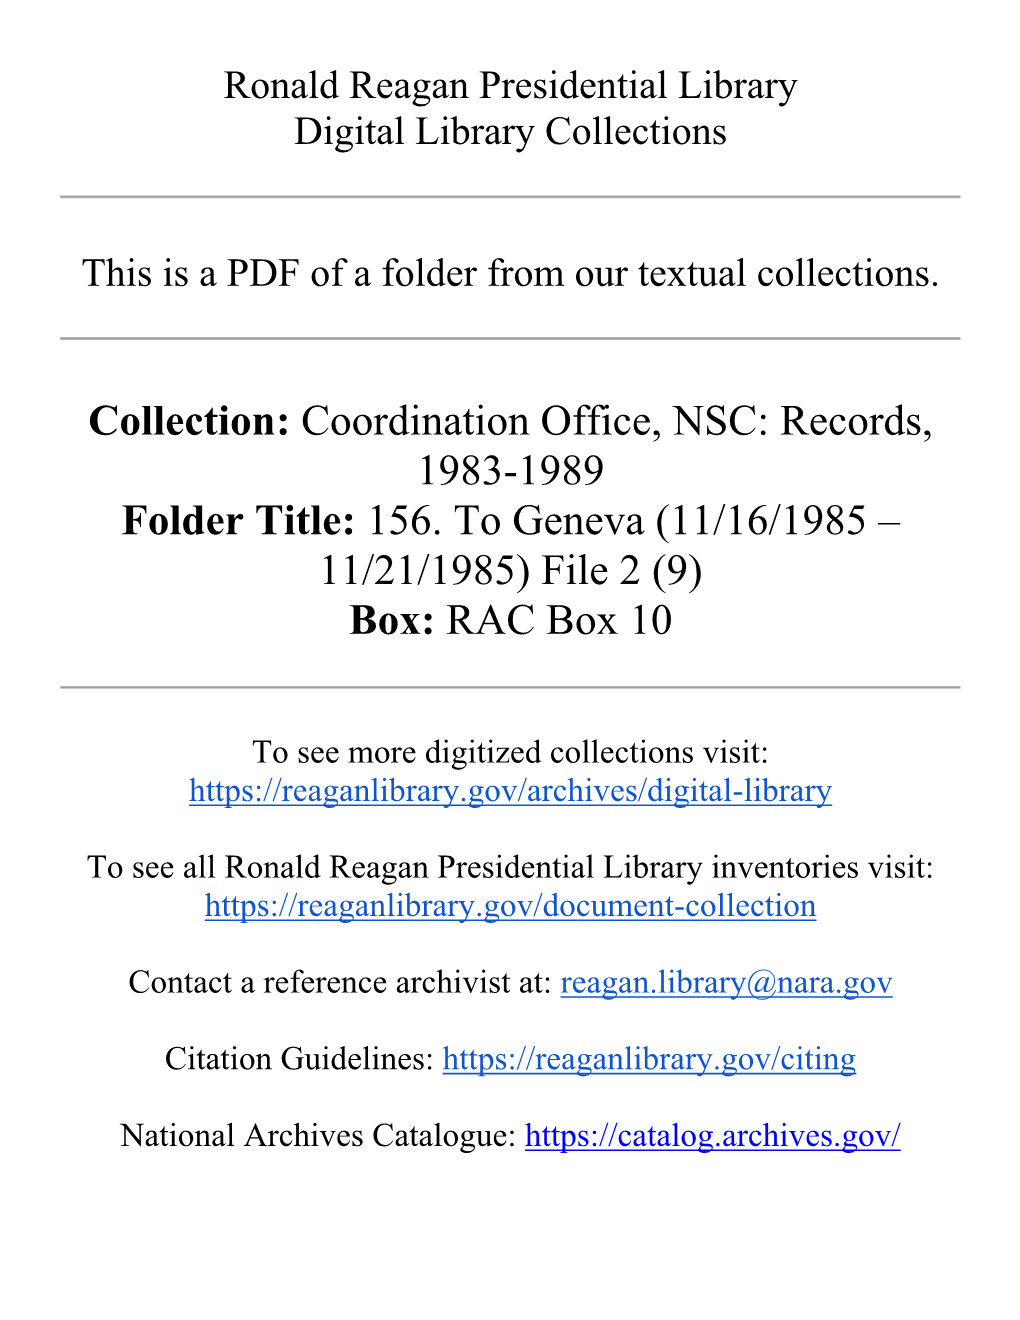 (11/16/1985 – 11/21/1985) File 2 (9) Box: RAC Box 10